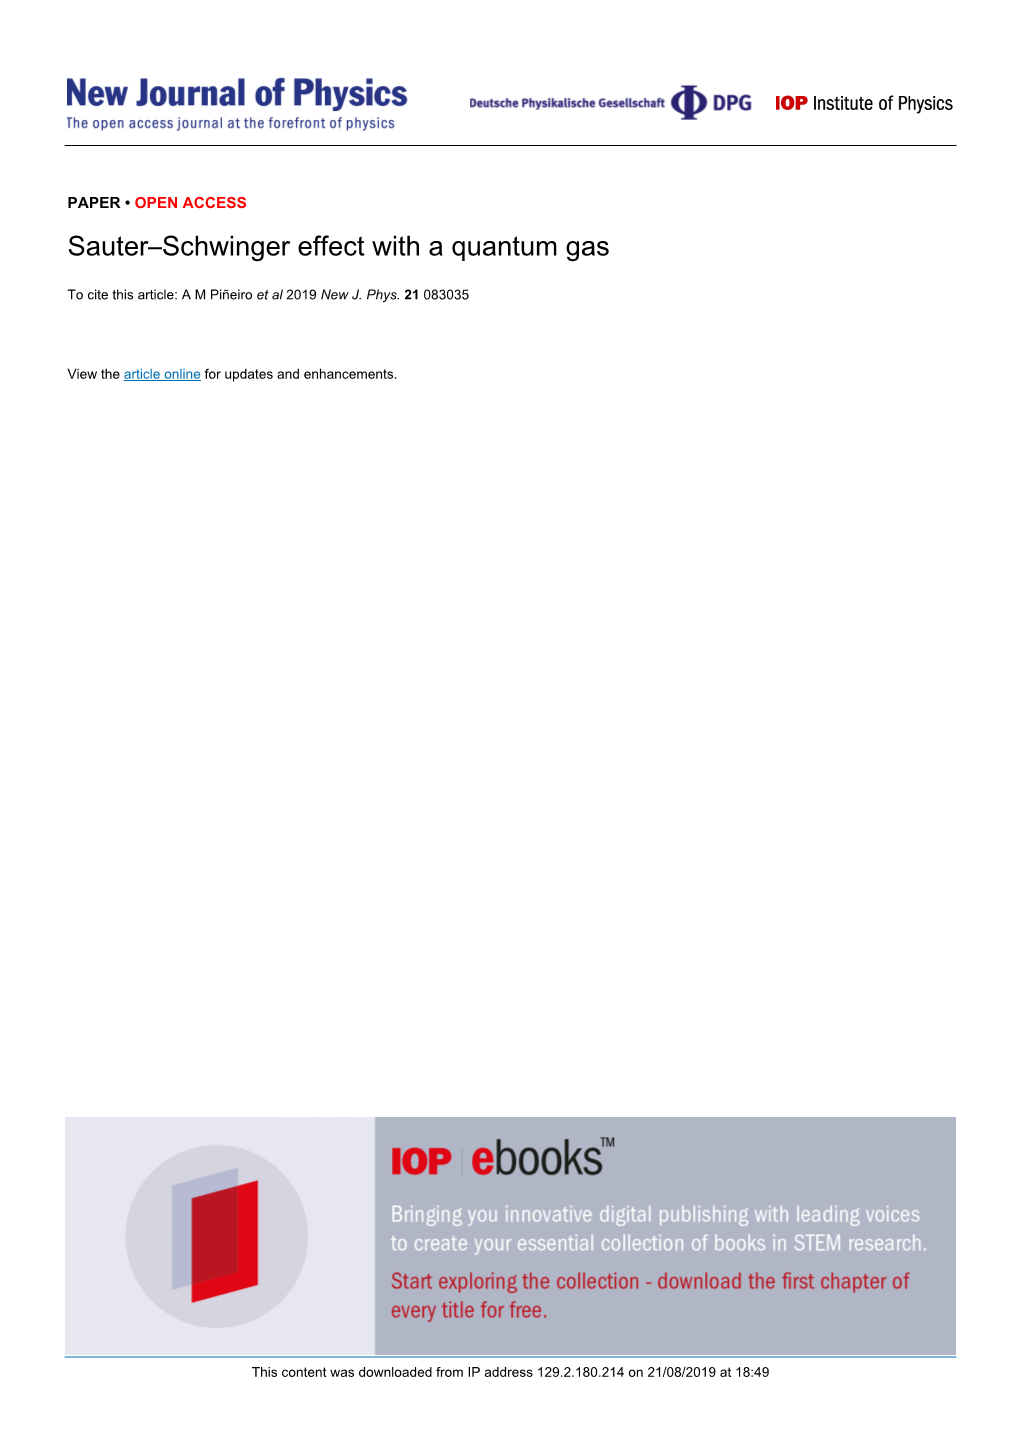 Sauter–Schwinger Effect with a Quantum Gas